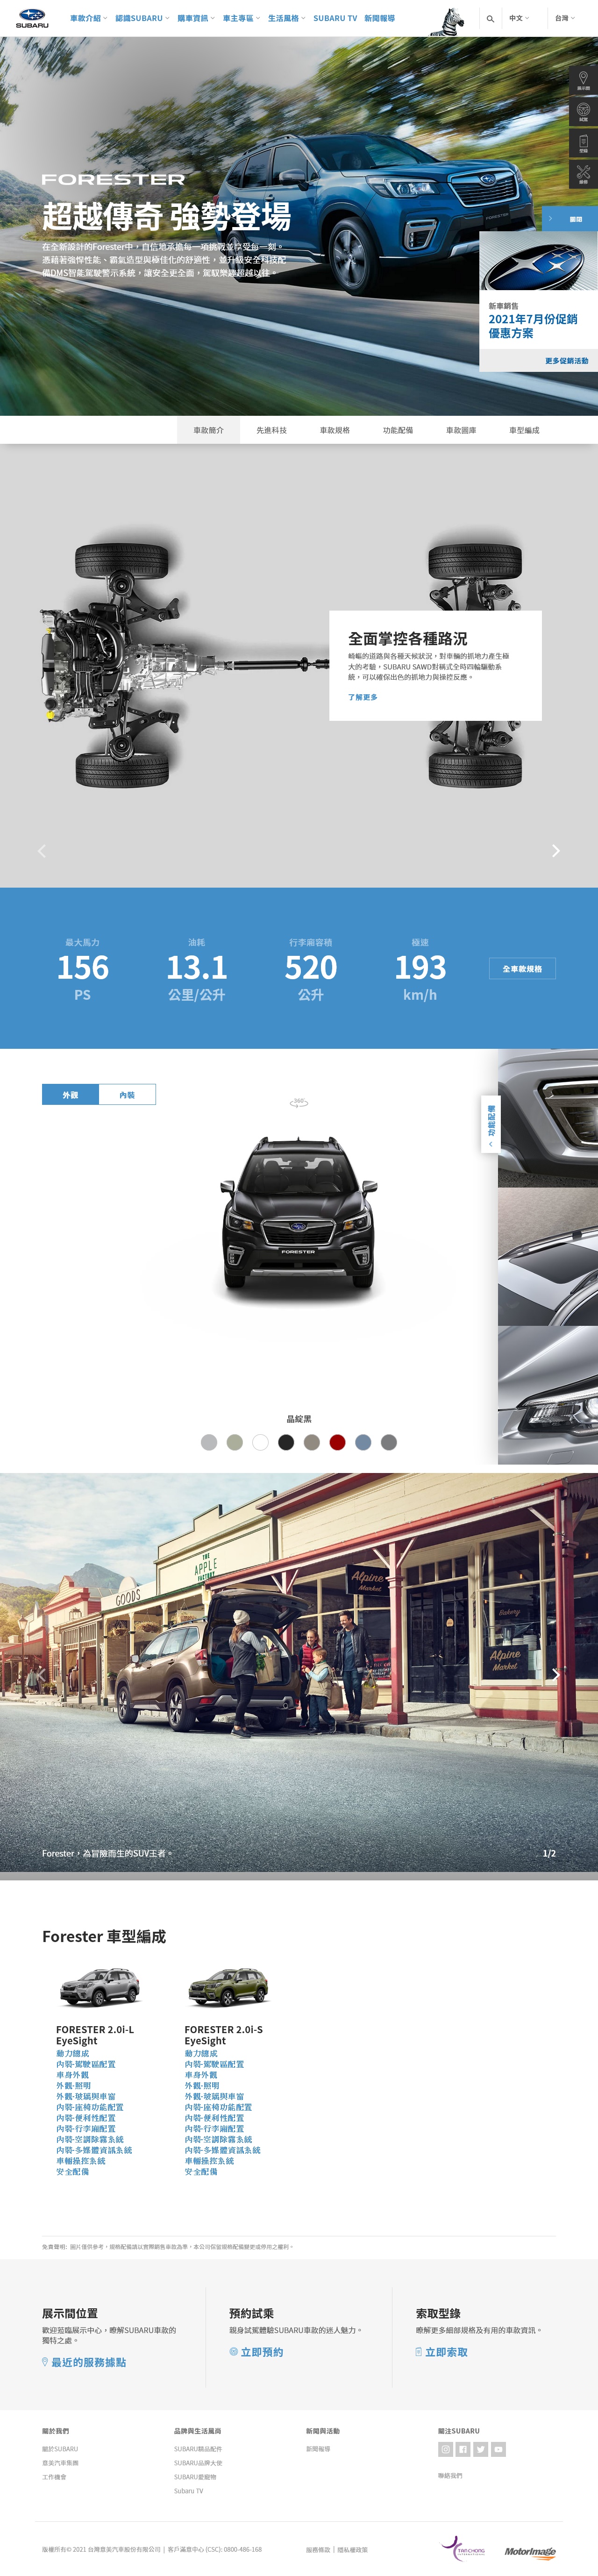 Subaru Forester_fullpage